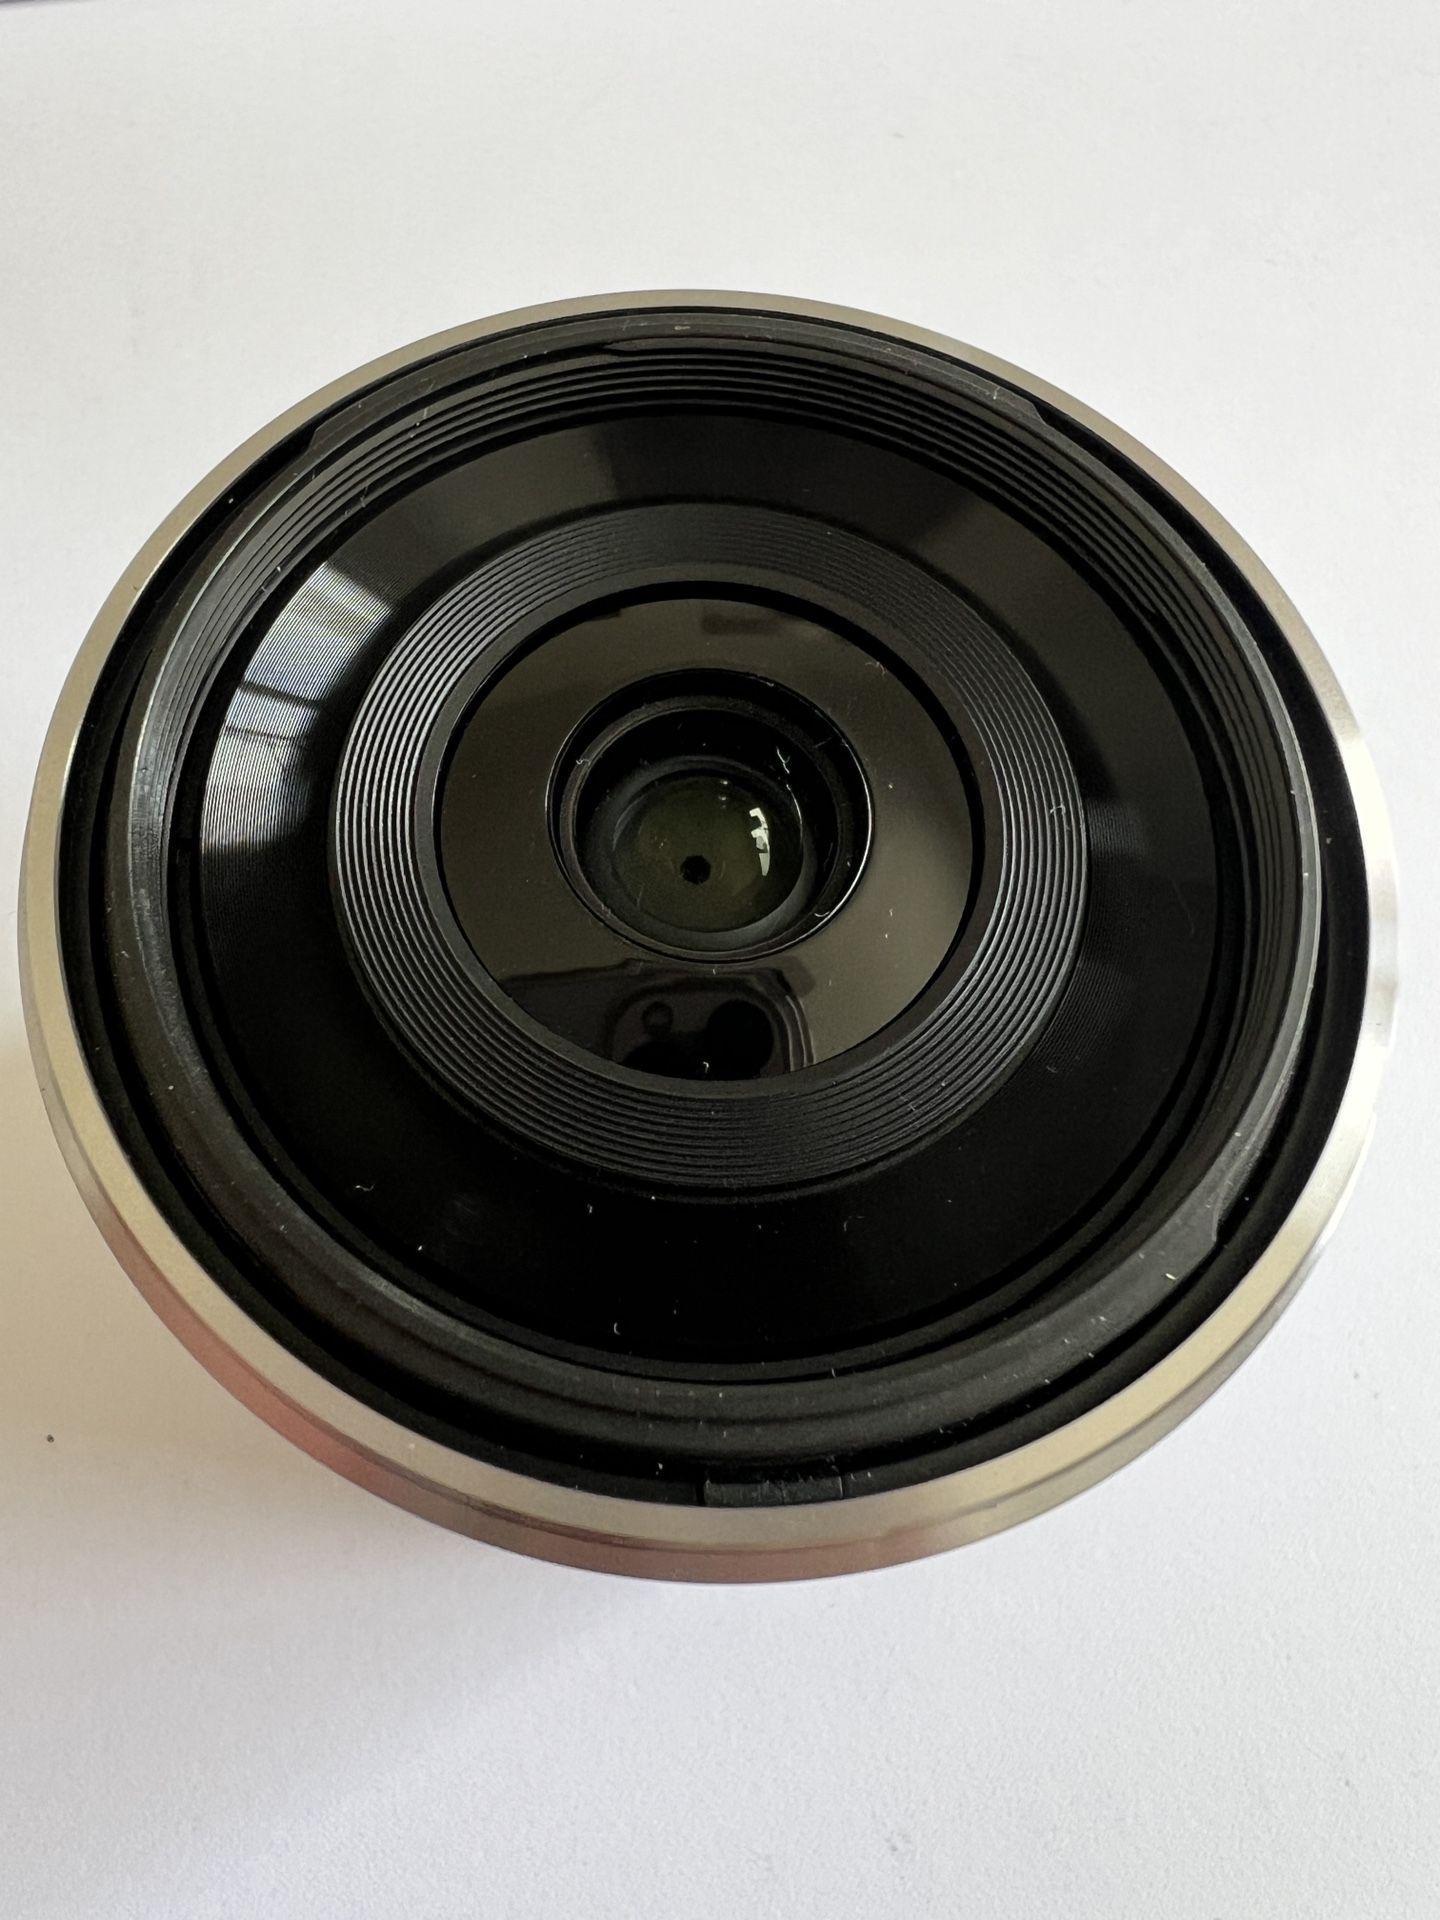 Sony E 30 mm F/3.5 Macro Lens